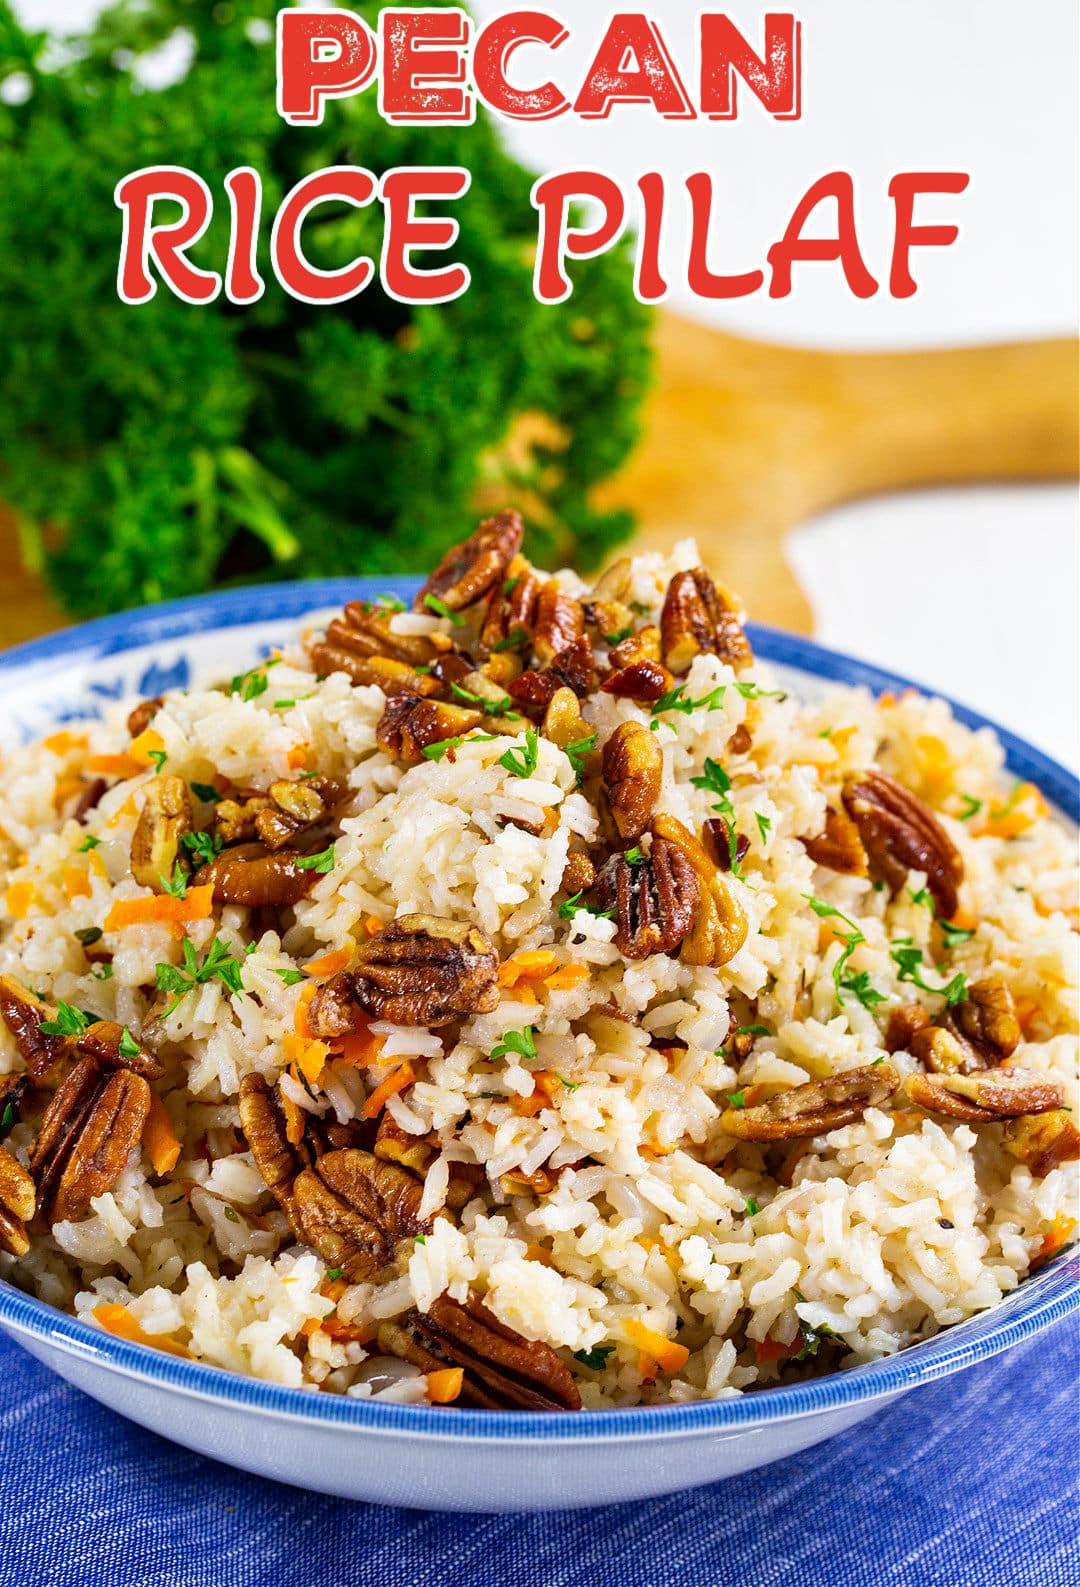 Pecan Rice Pilaf in a serving bowl.